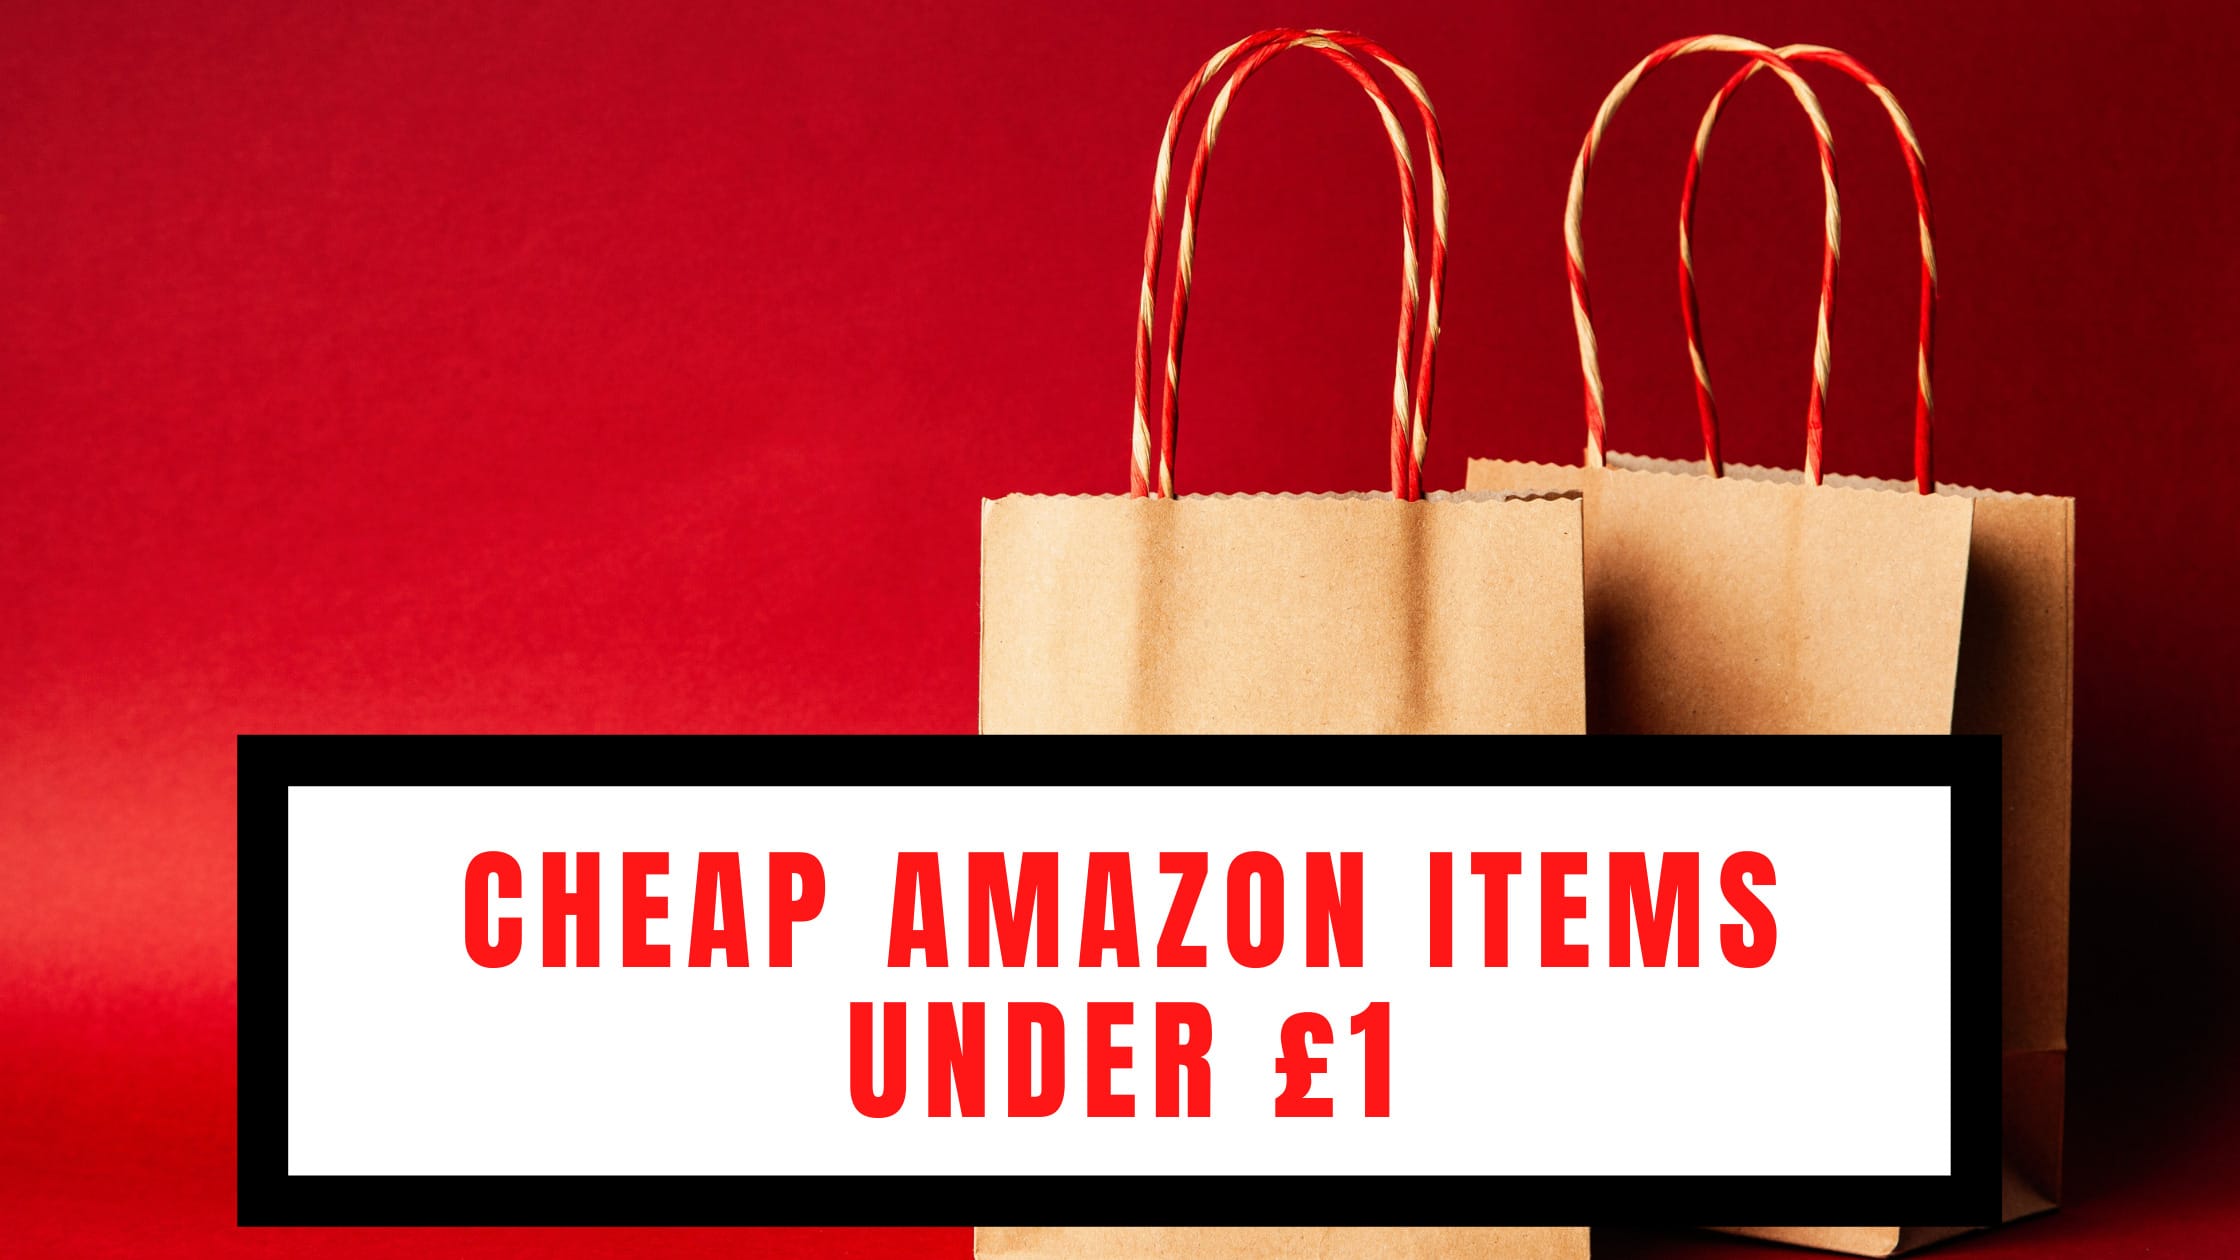 Cheap Amazon Items Under £1